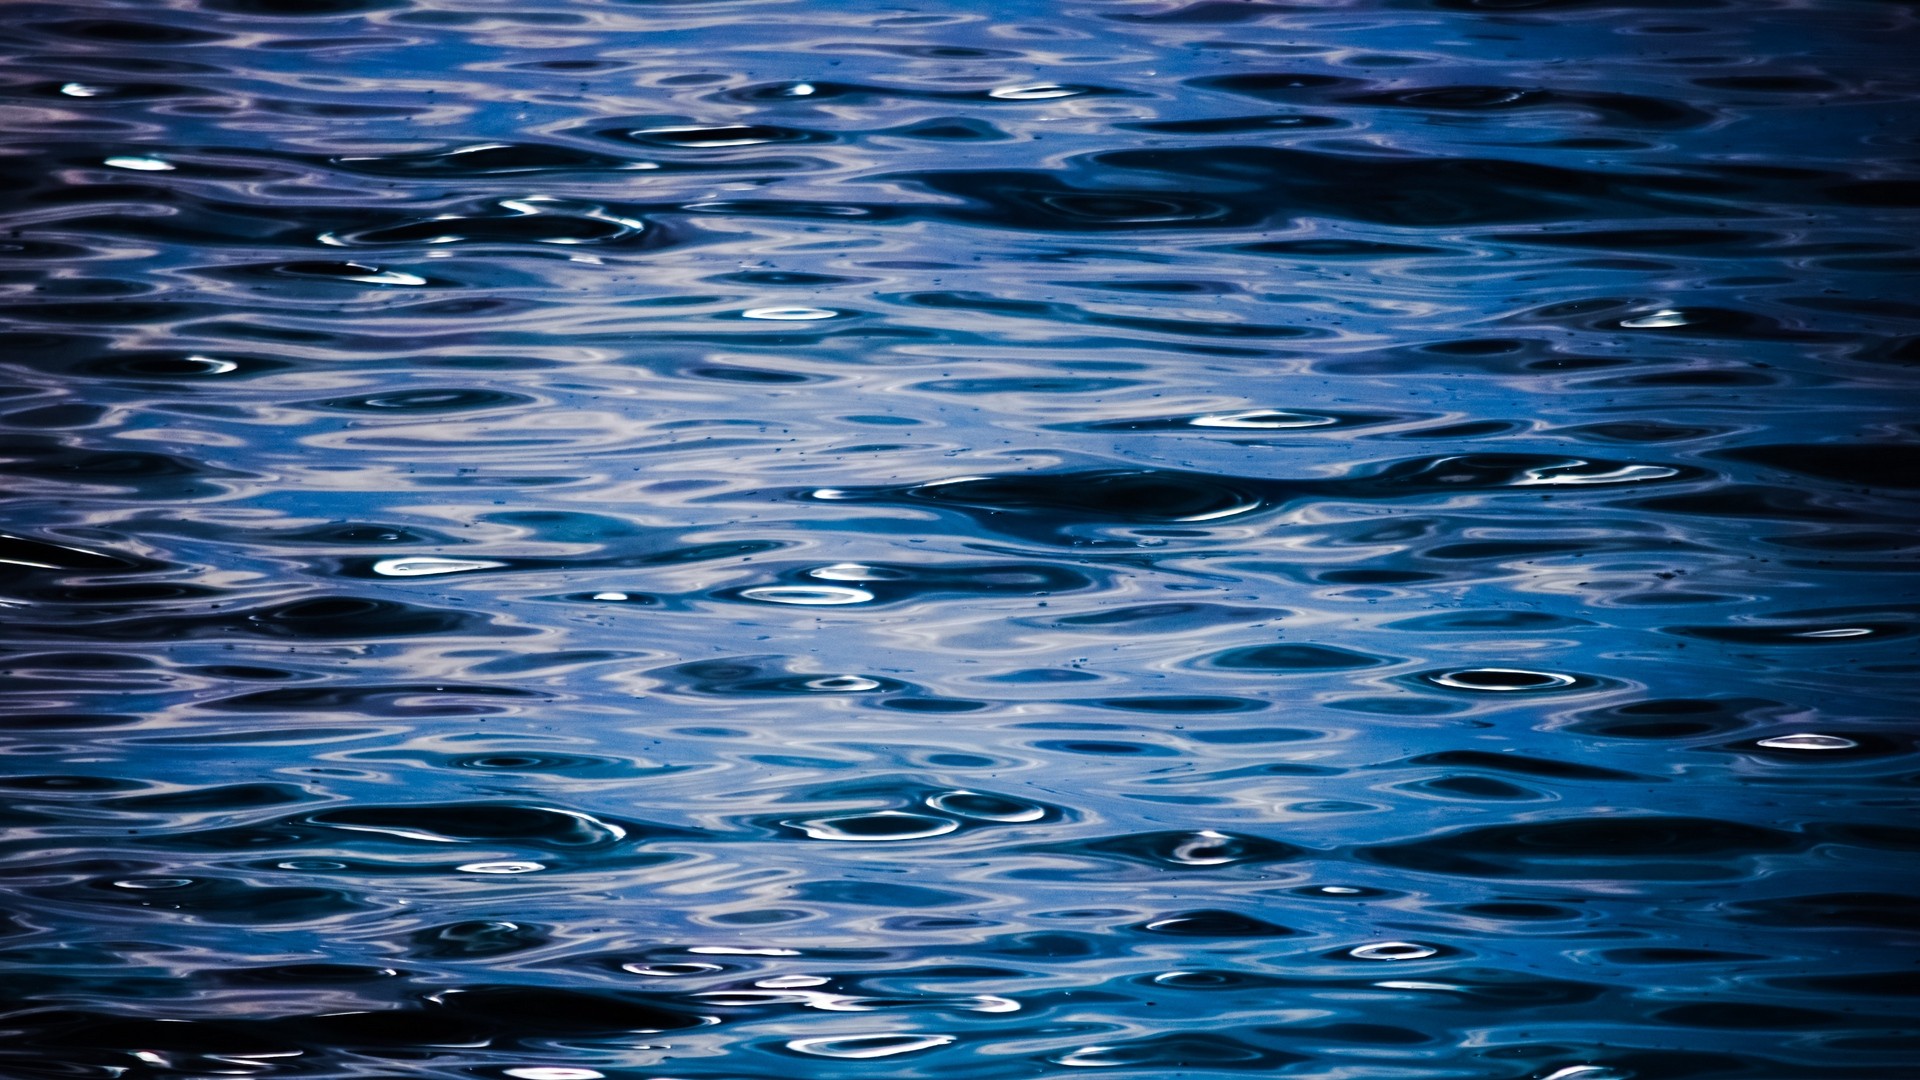 1920x1080 wallpapers: water, sea, ripple, waviness (image)